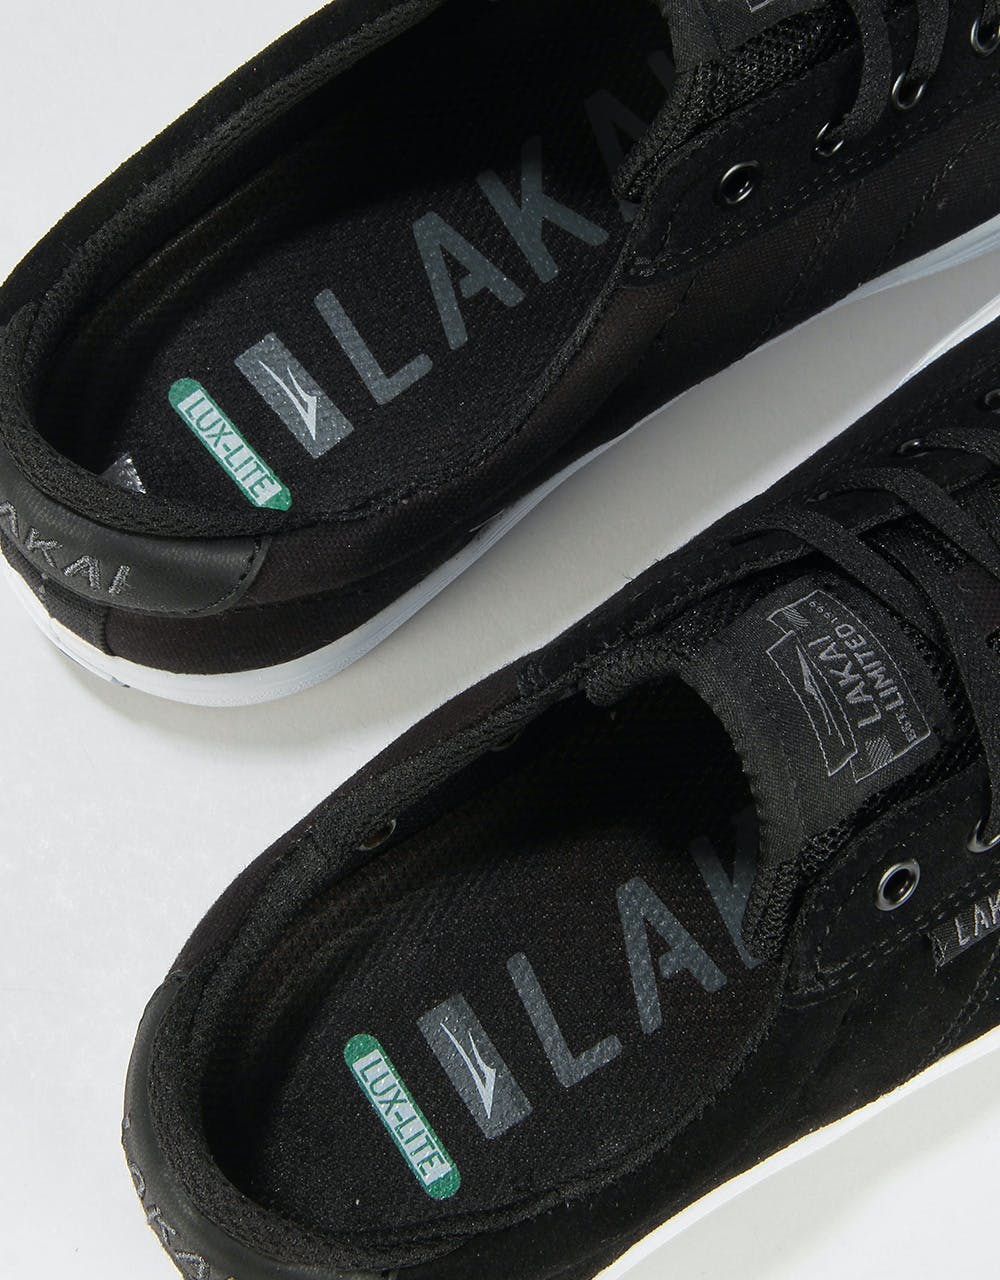 Lakai Flaco Skate Shoes - Black/Charcoal Suede